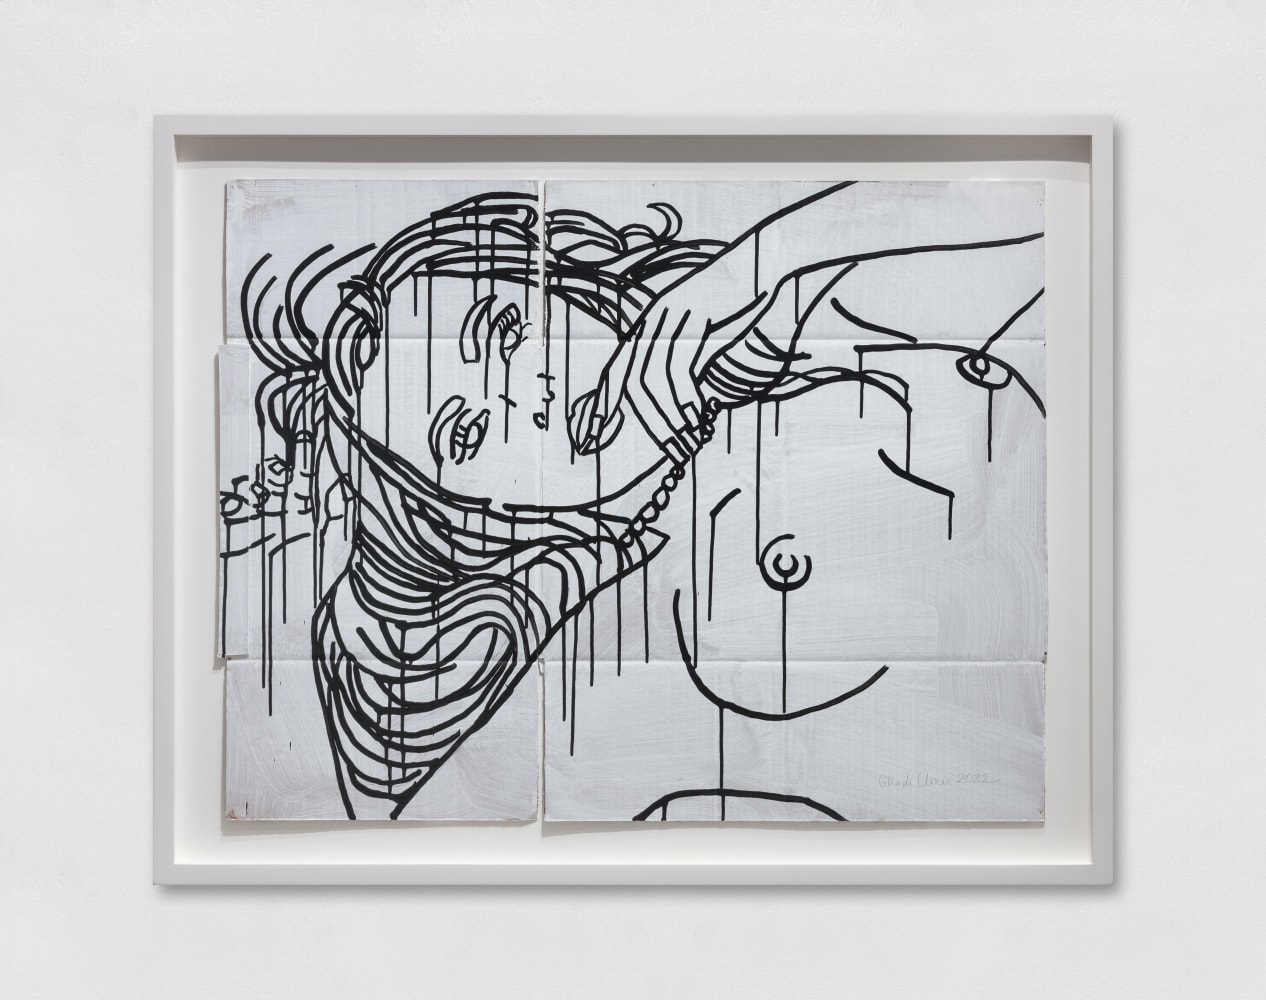 Ghada Amer (b. 1963)
A DRAWING FOR AMINA, 2022
Acrylic and ink on cardboard
30 1/2 x 38 1/2 inches
77.5 x 97.8 cm